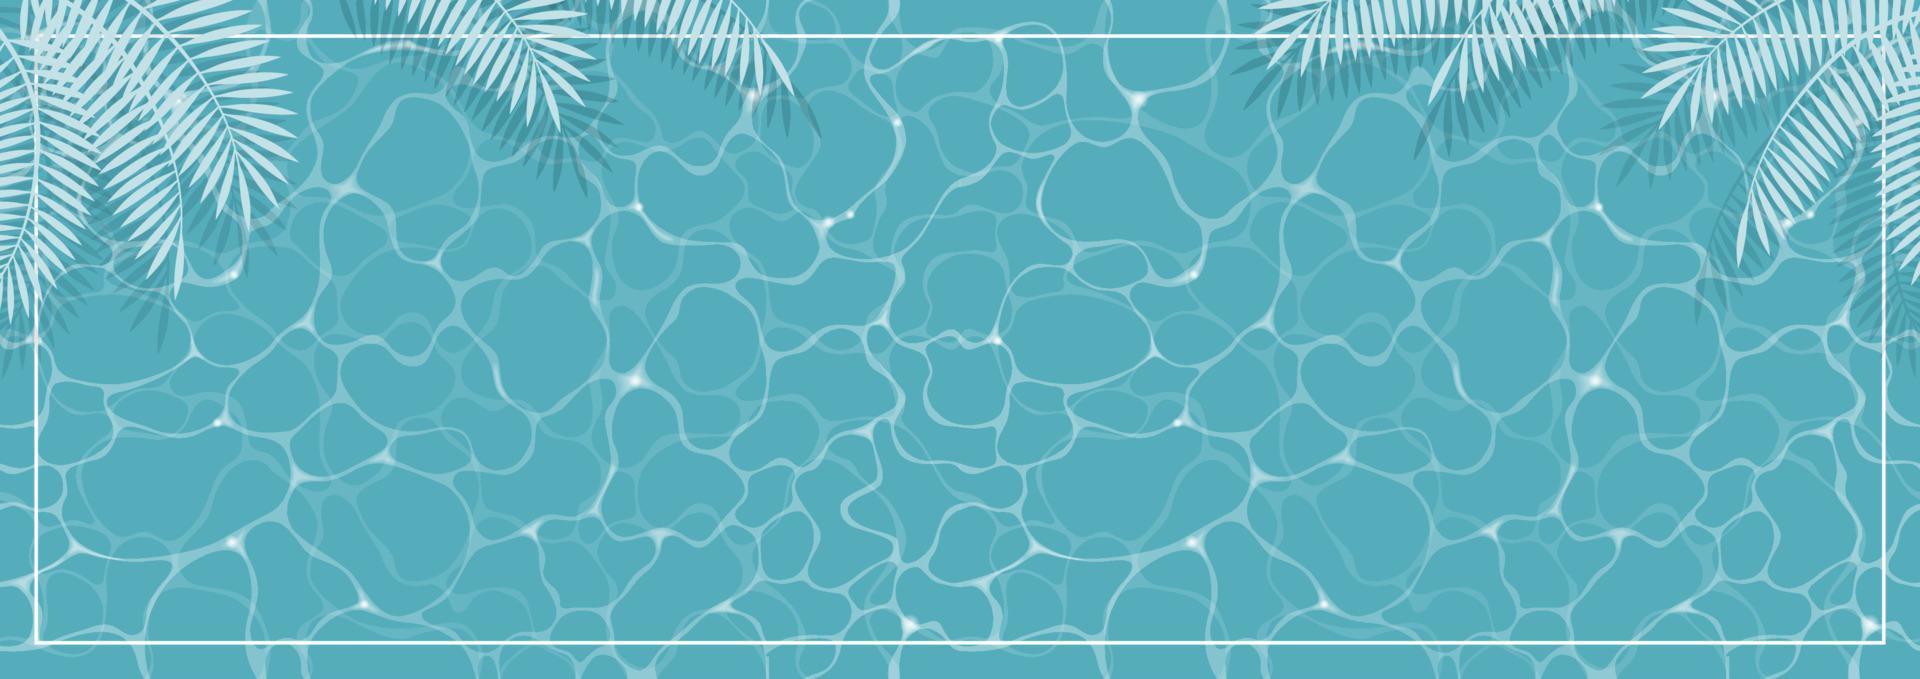 vector golfde zwemmen zwembad en palm bladeren abstract achtergrond illustratie.